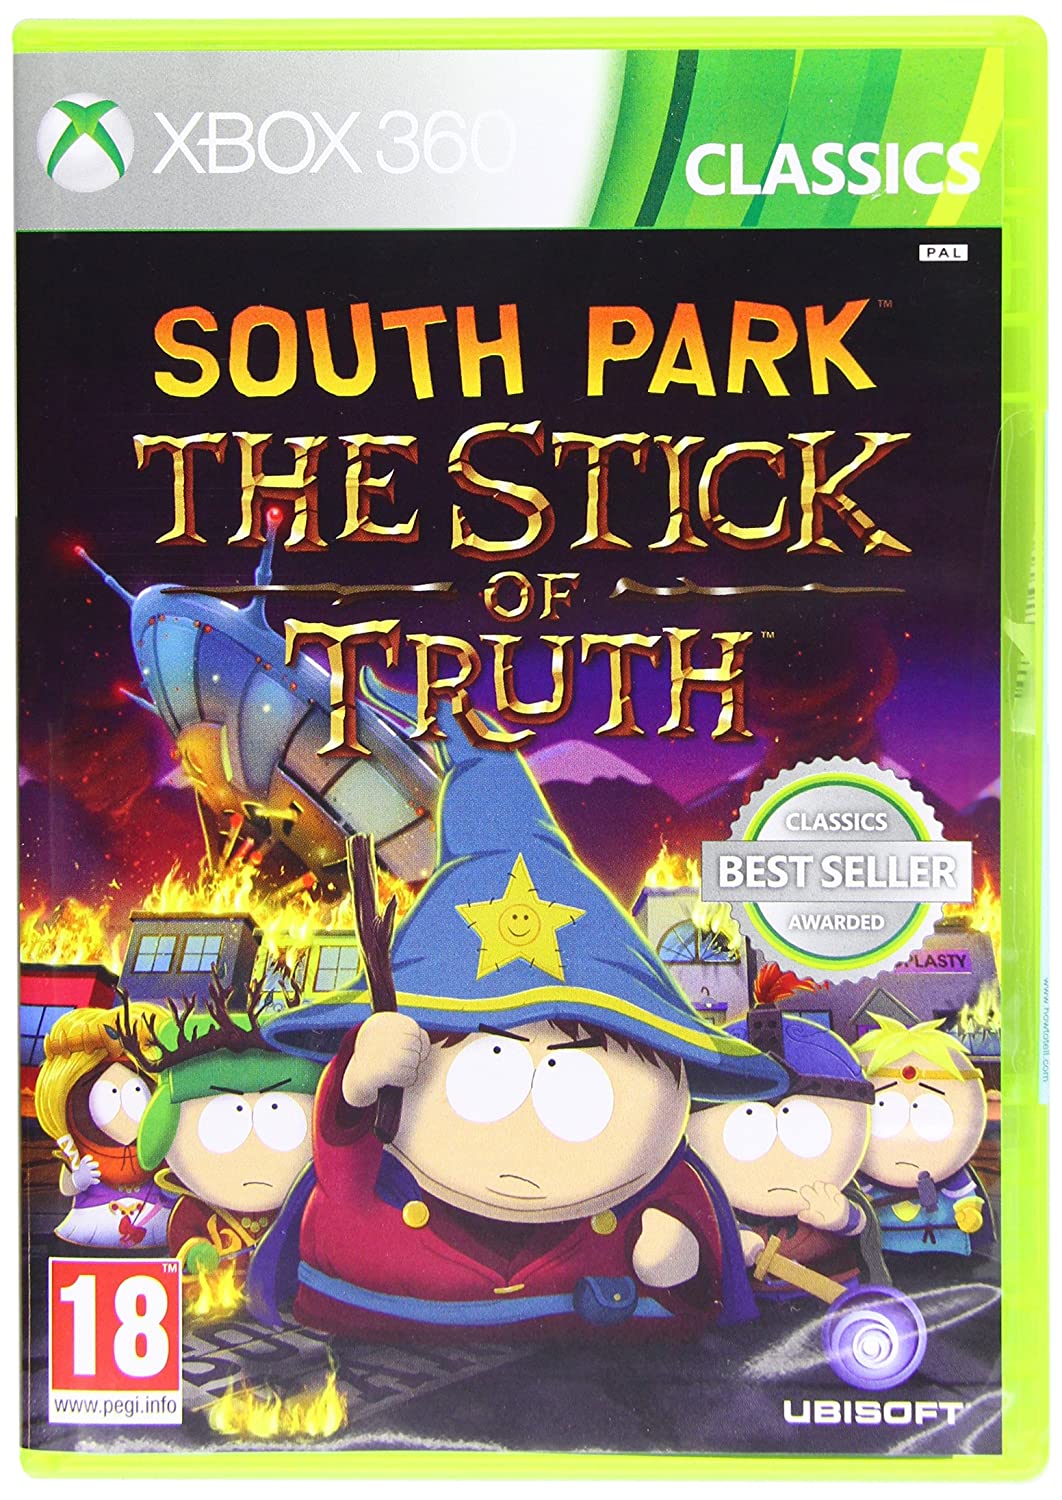 South Park The Stick of Truth (Classics) - Xbox 360 Játékok